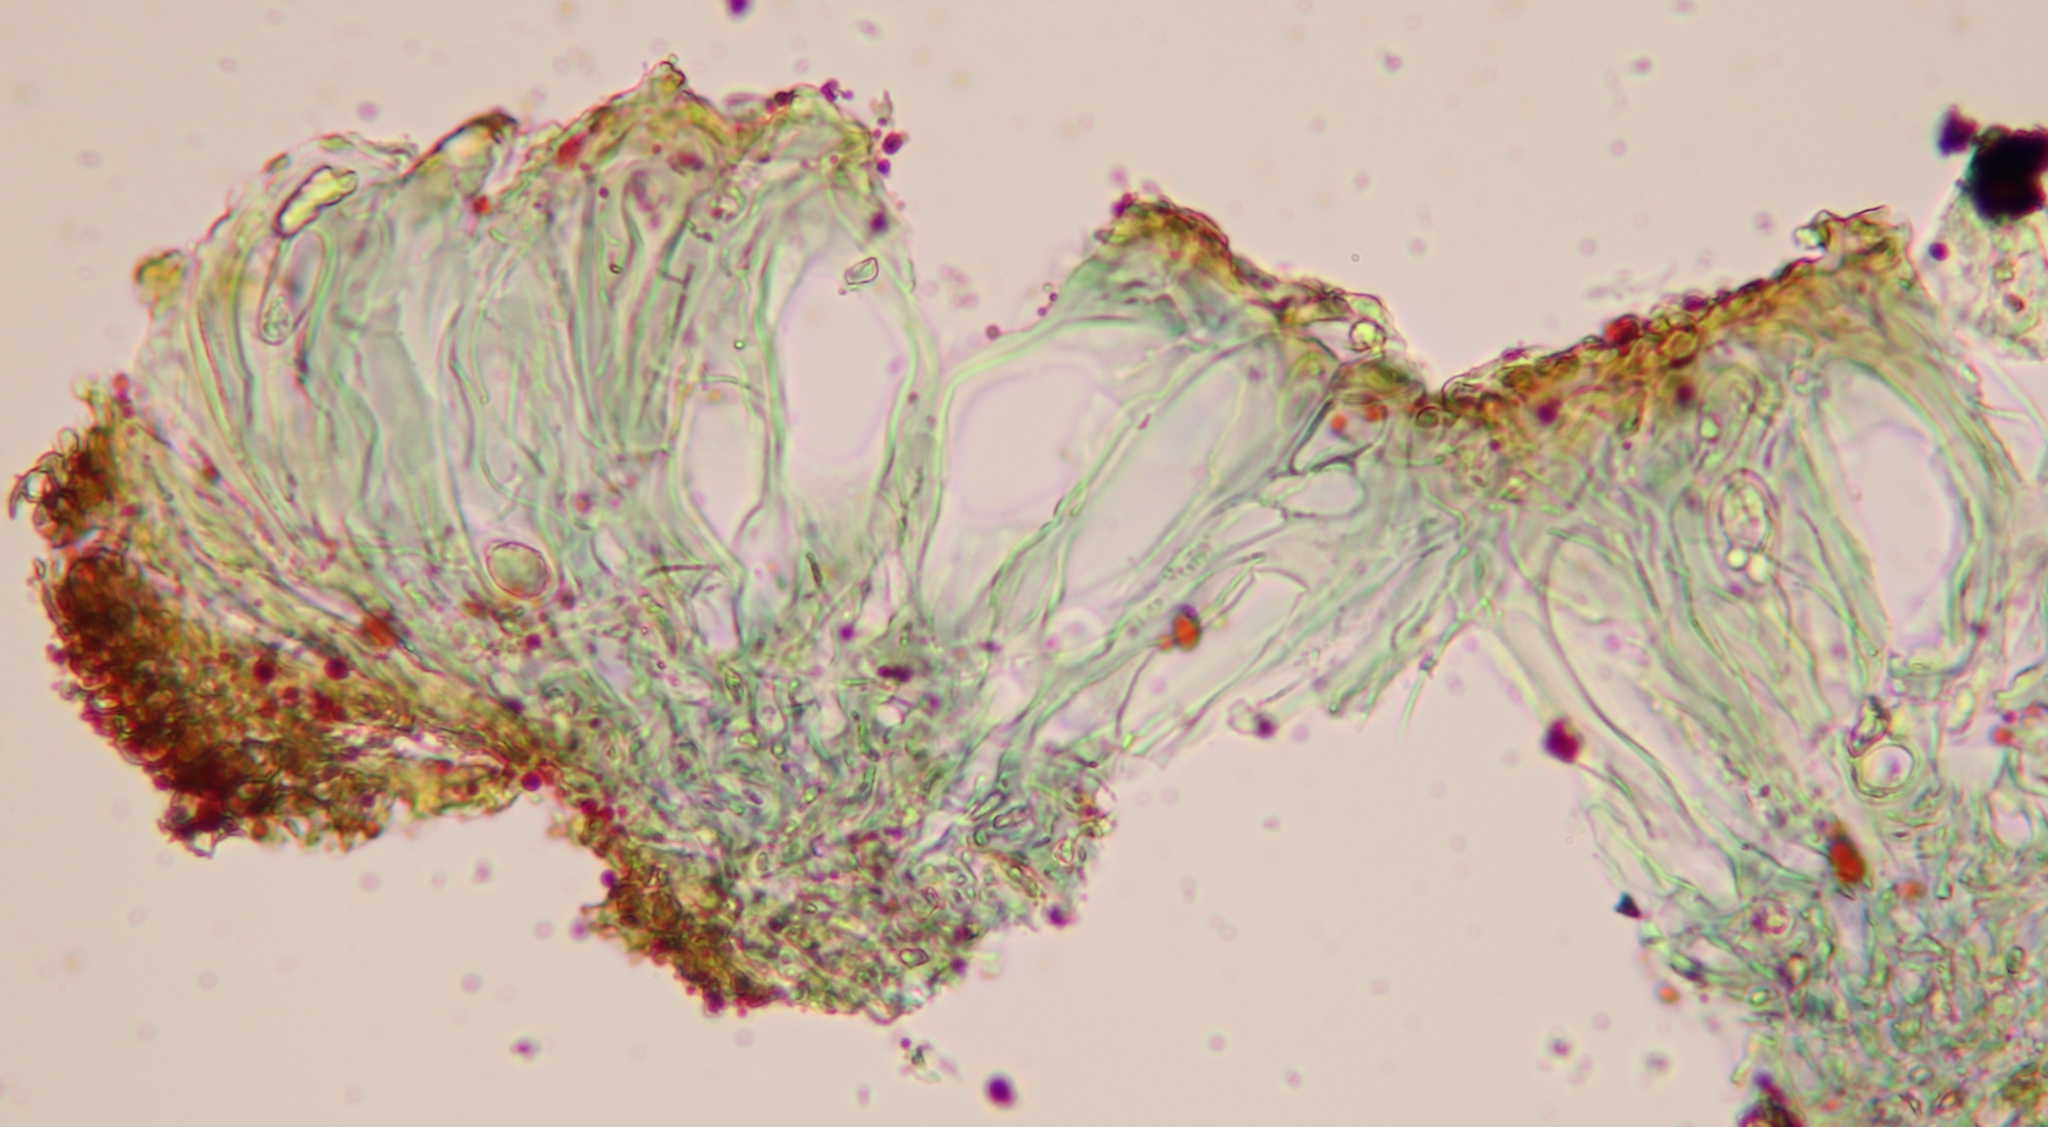 Placynthiella image